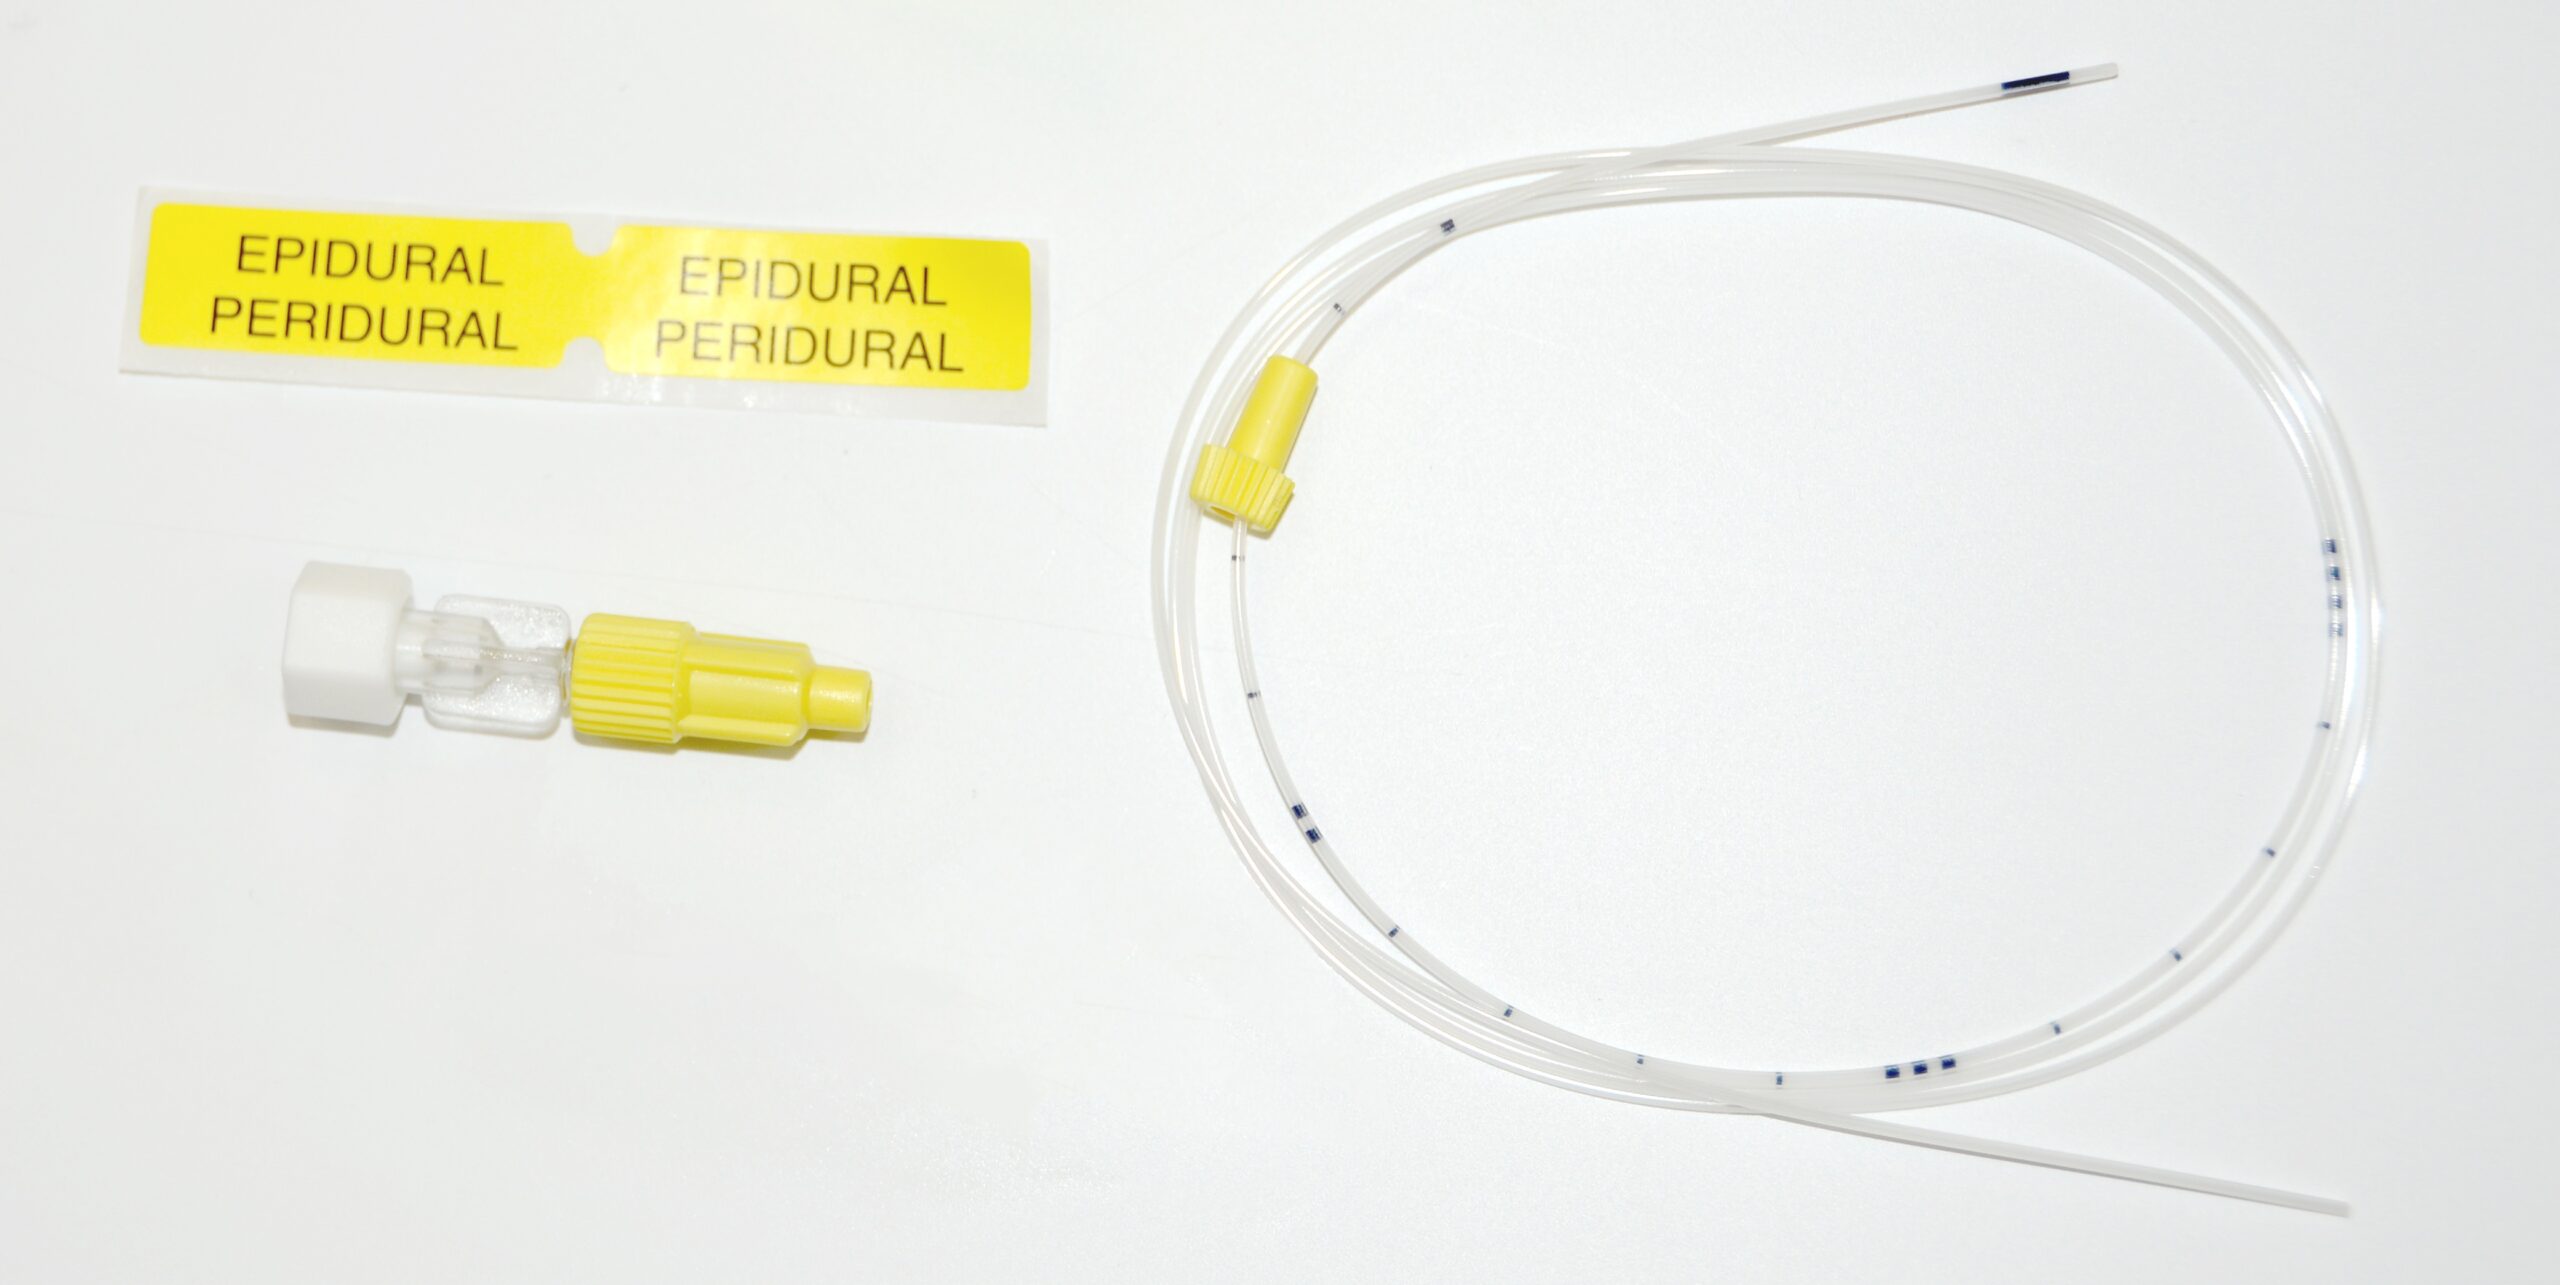 Peripur : epidural catheter